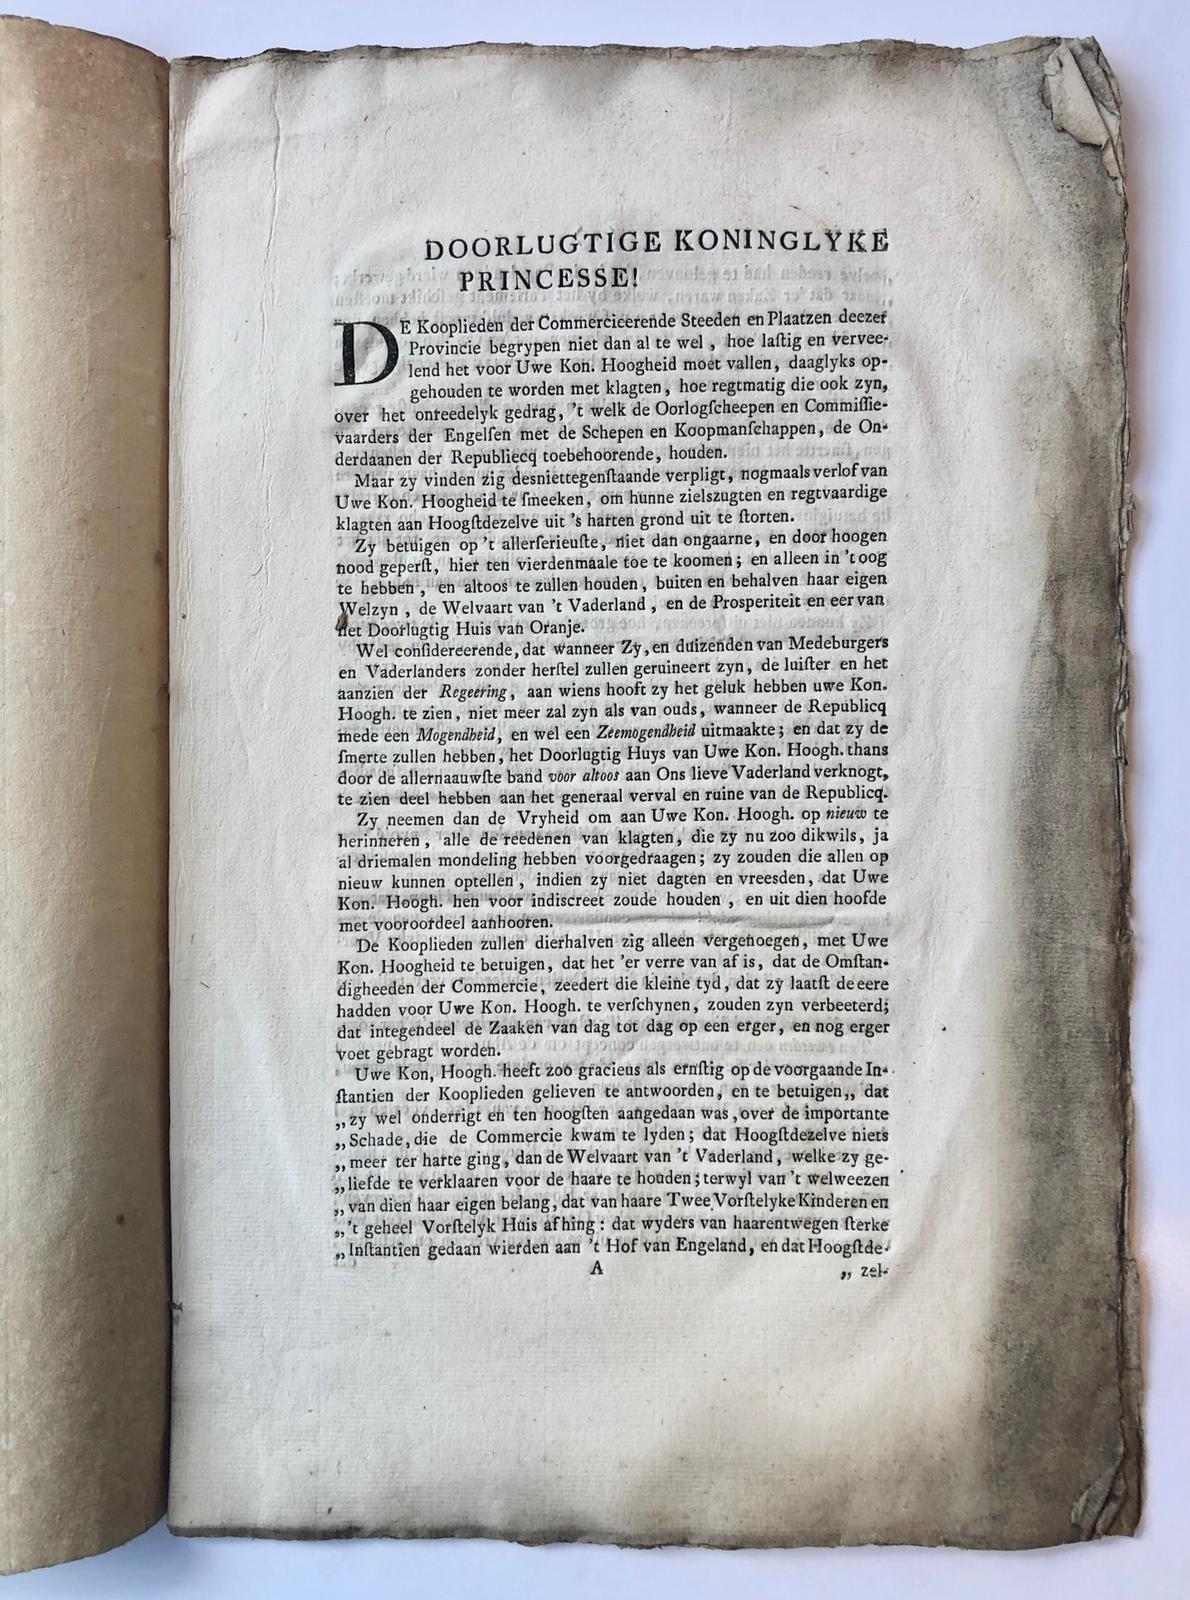  - [Printed publication, shippin, Scheepvaart, gedrag Engelsen, 1758] 'Aanspraak aan Haare Kon. Hoogheid 7 december 1758'. Folio, 8 pag., gedrukt door Tirion te Amsterdam [1758].